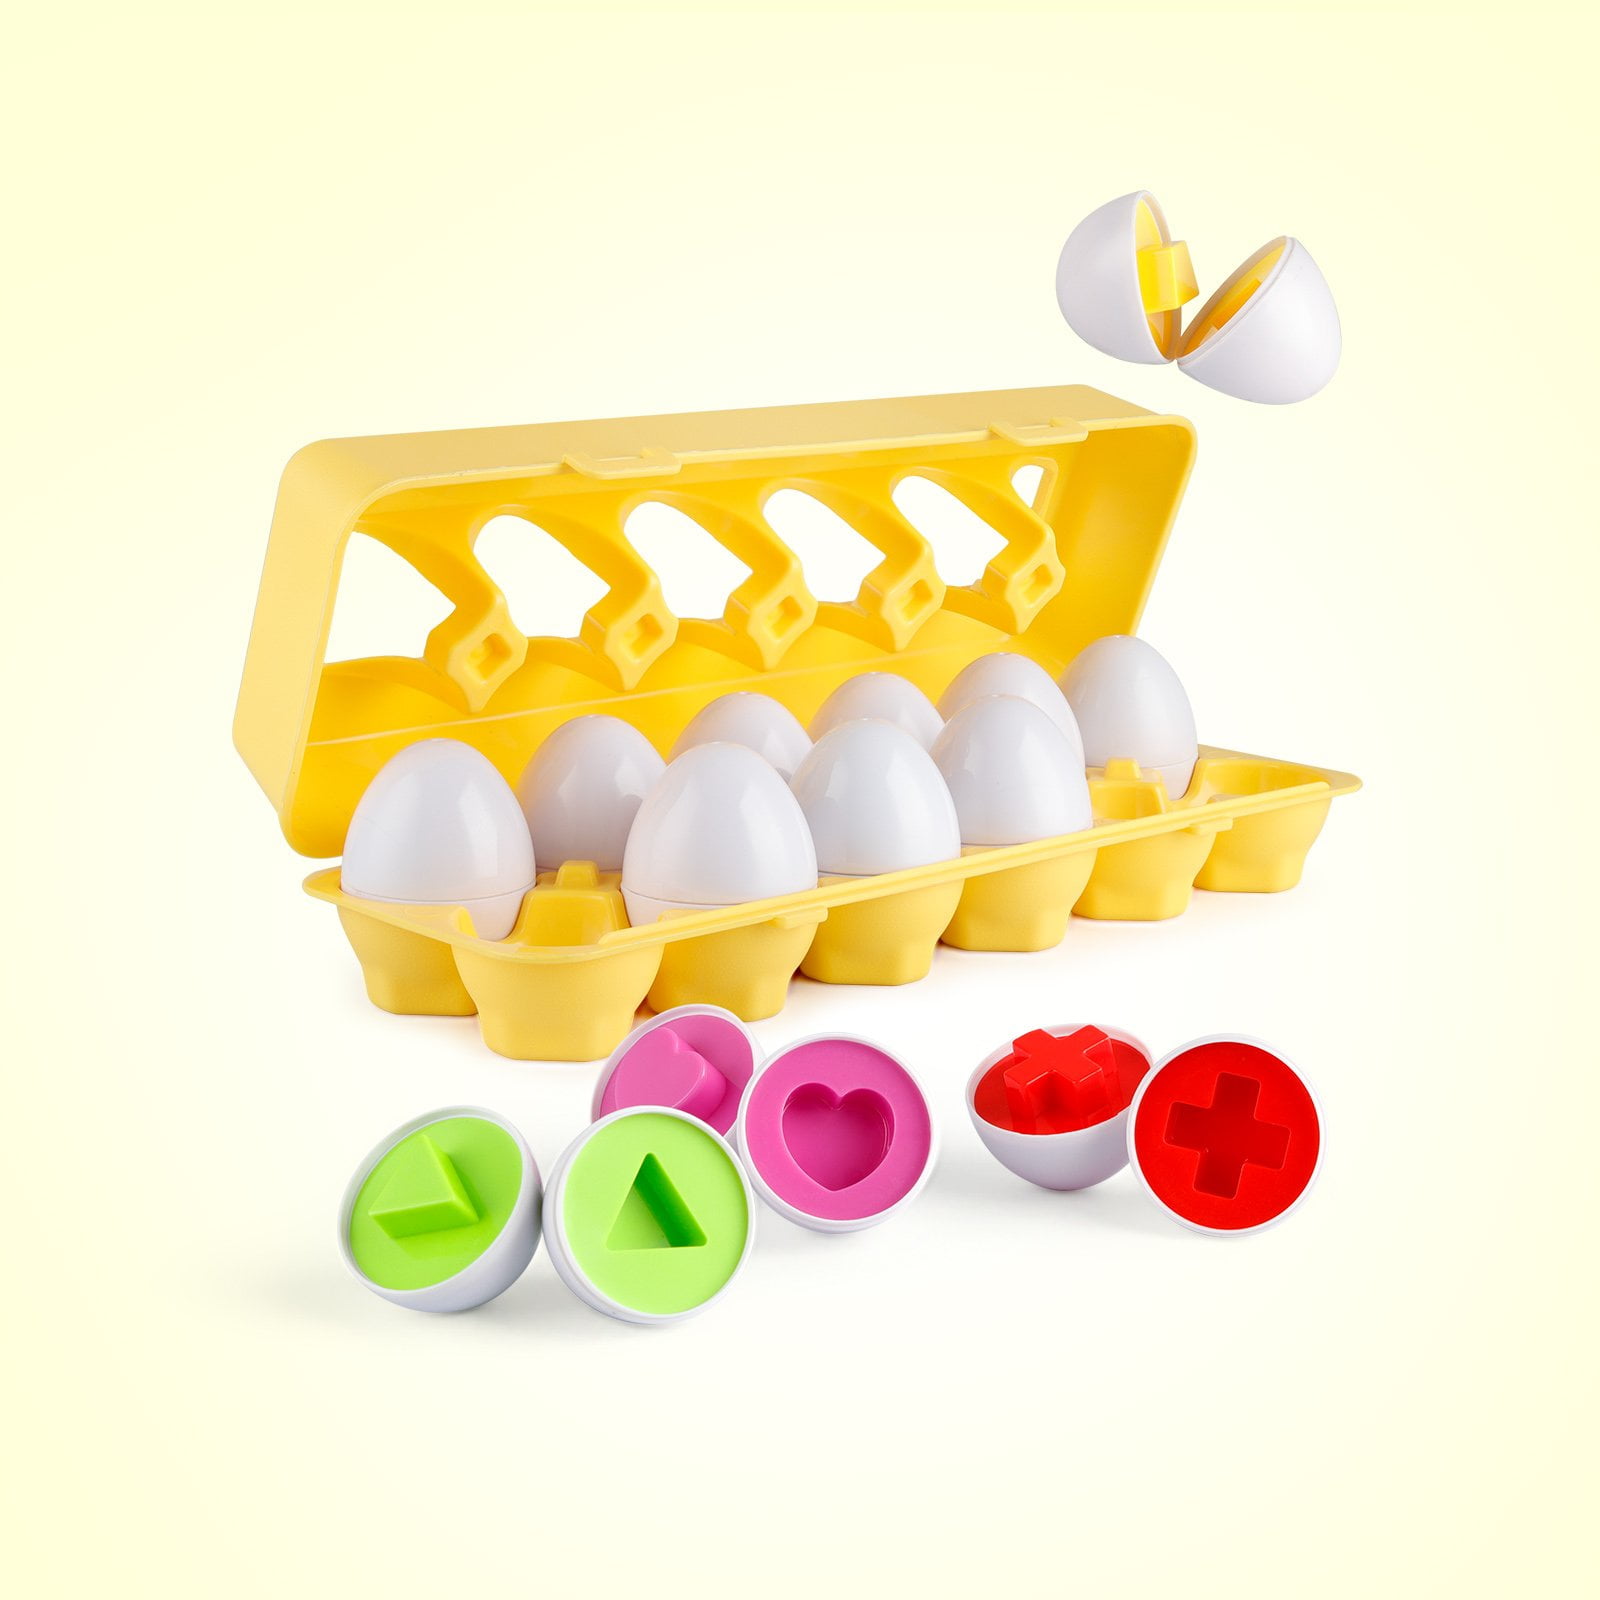 Color & Shape Sorter Matching Egg Set Educational Learning Toy Kids Gifts 12pcs 